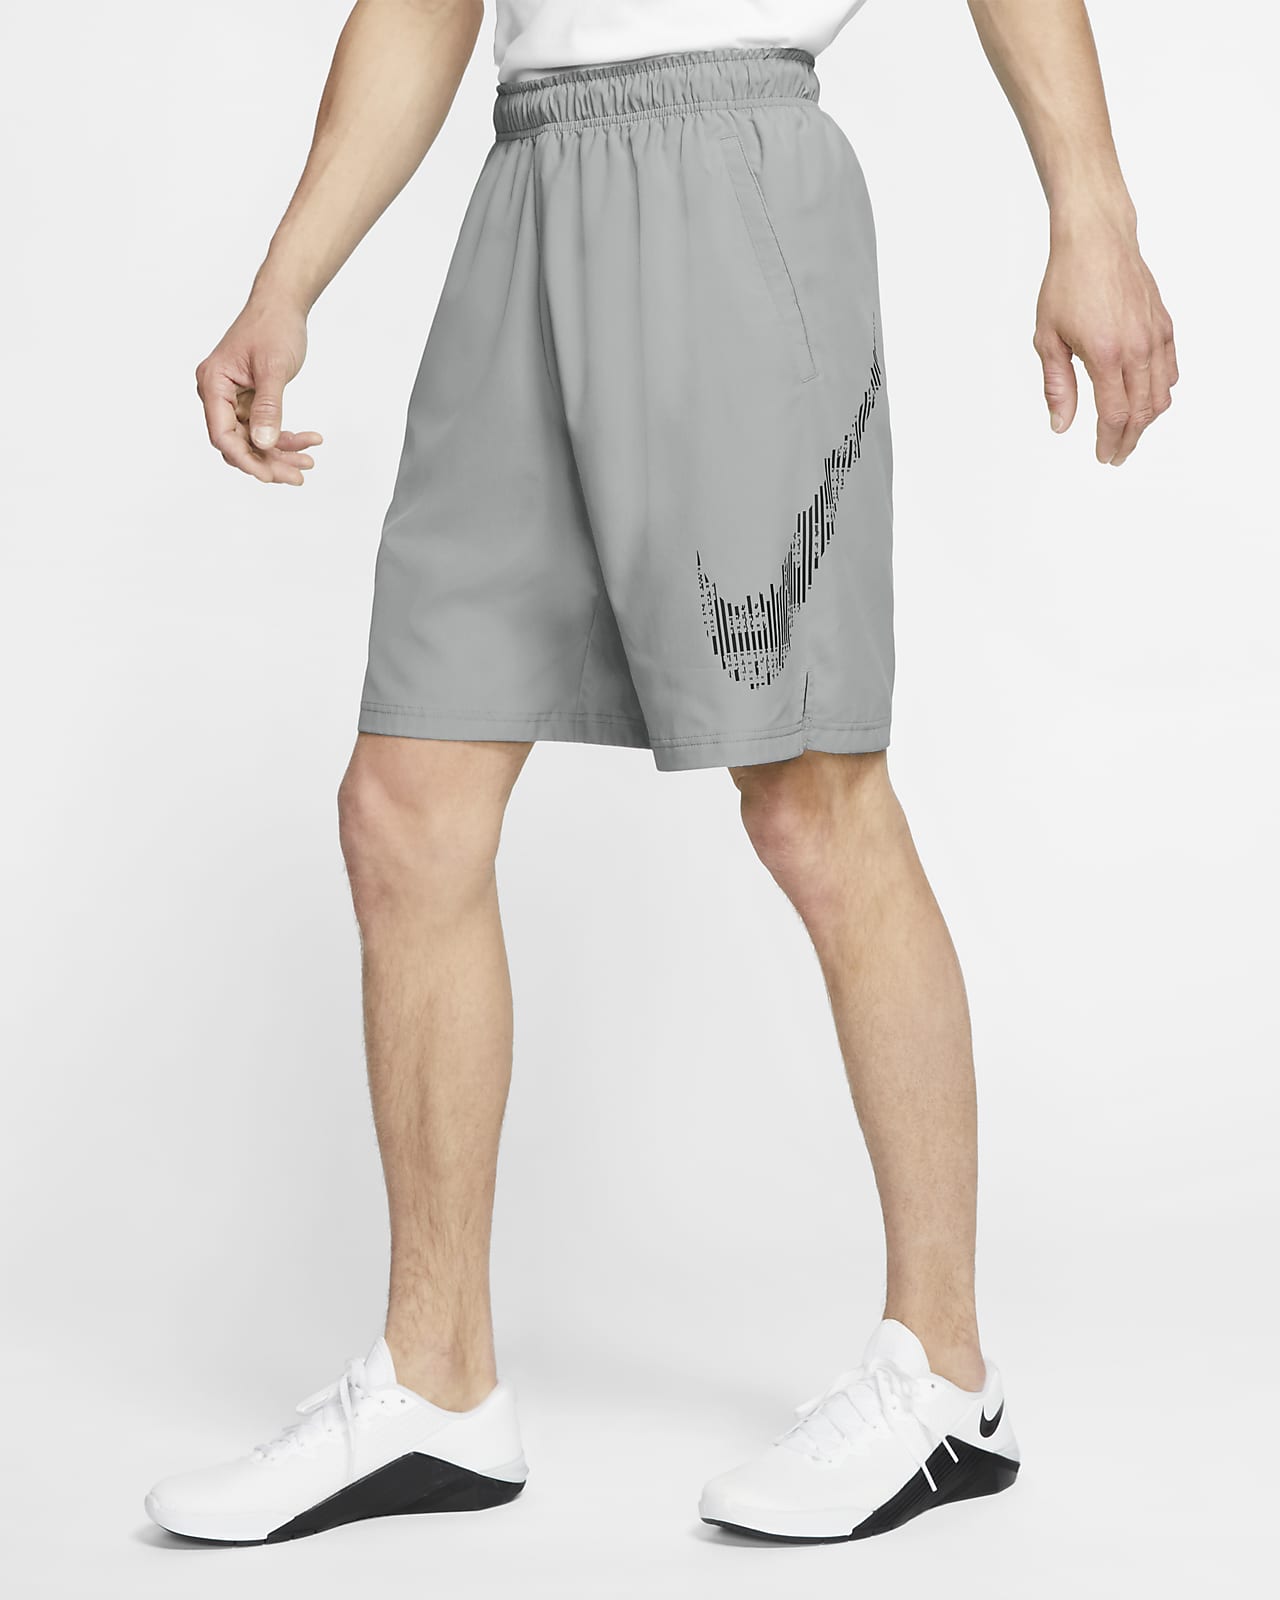 nike men's flex 2.0 graphic training shorts